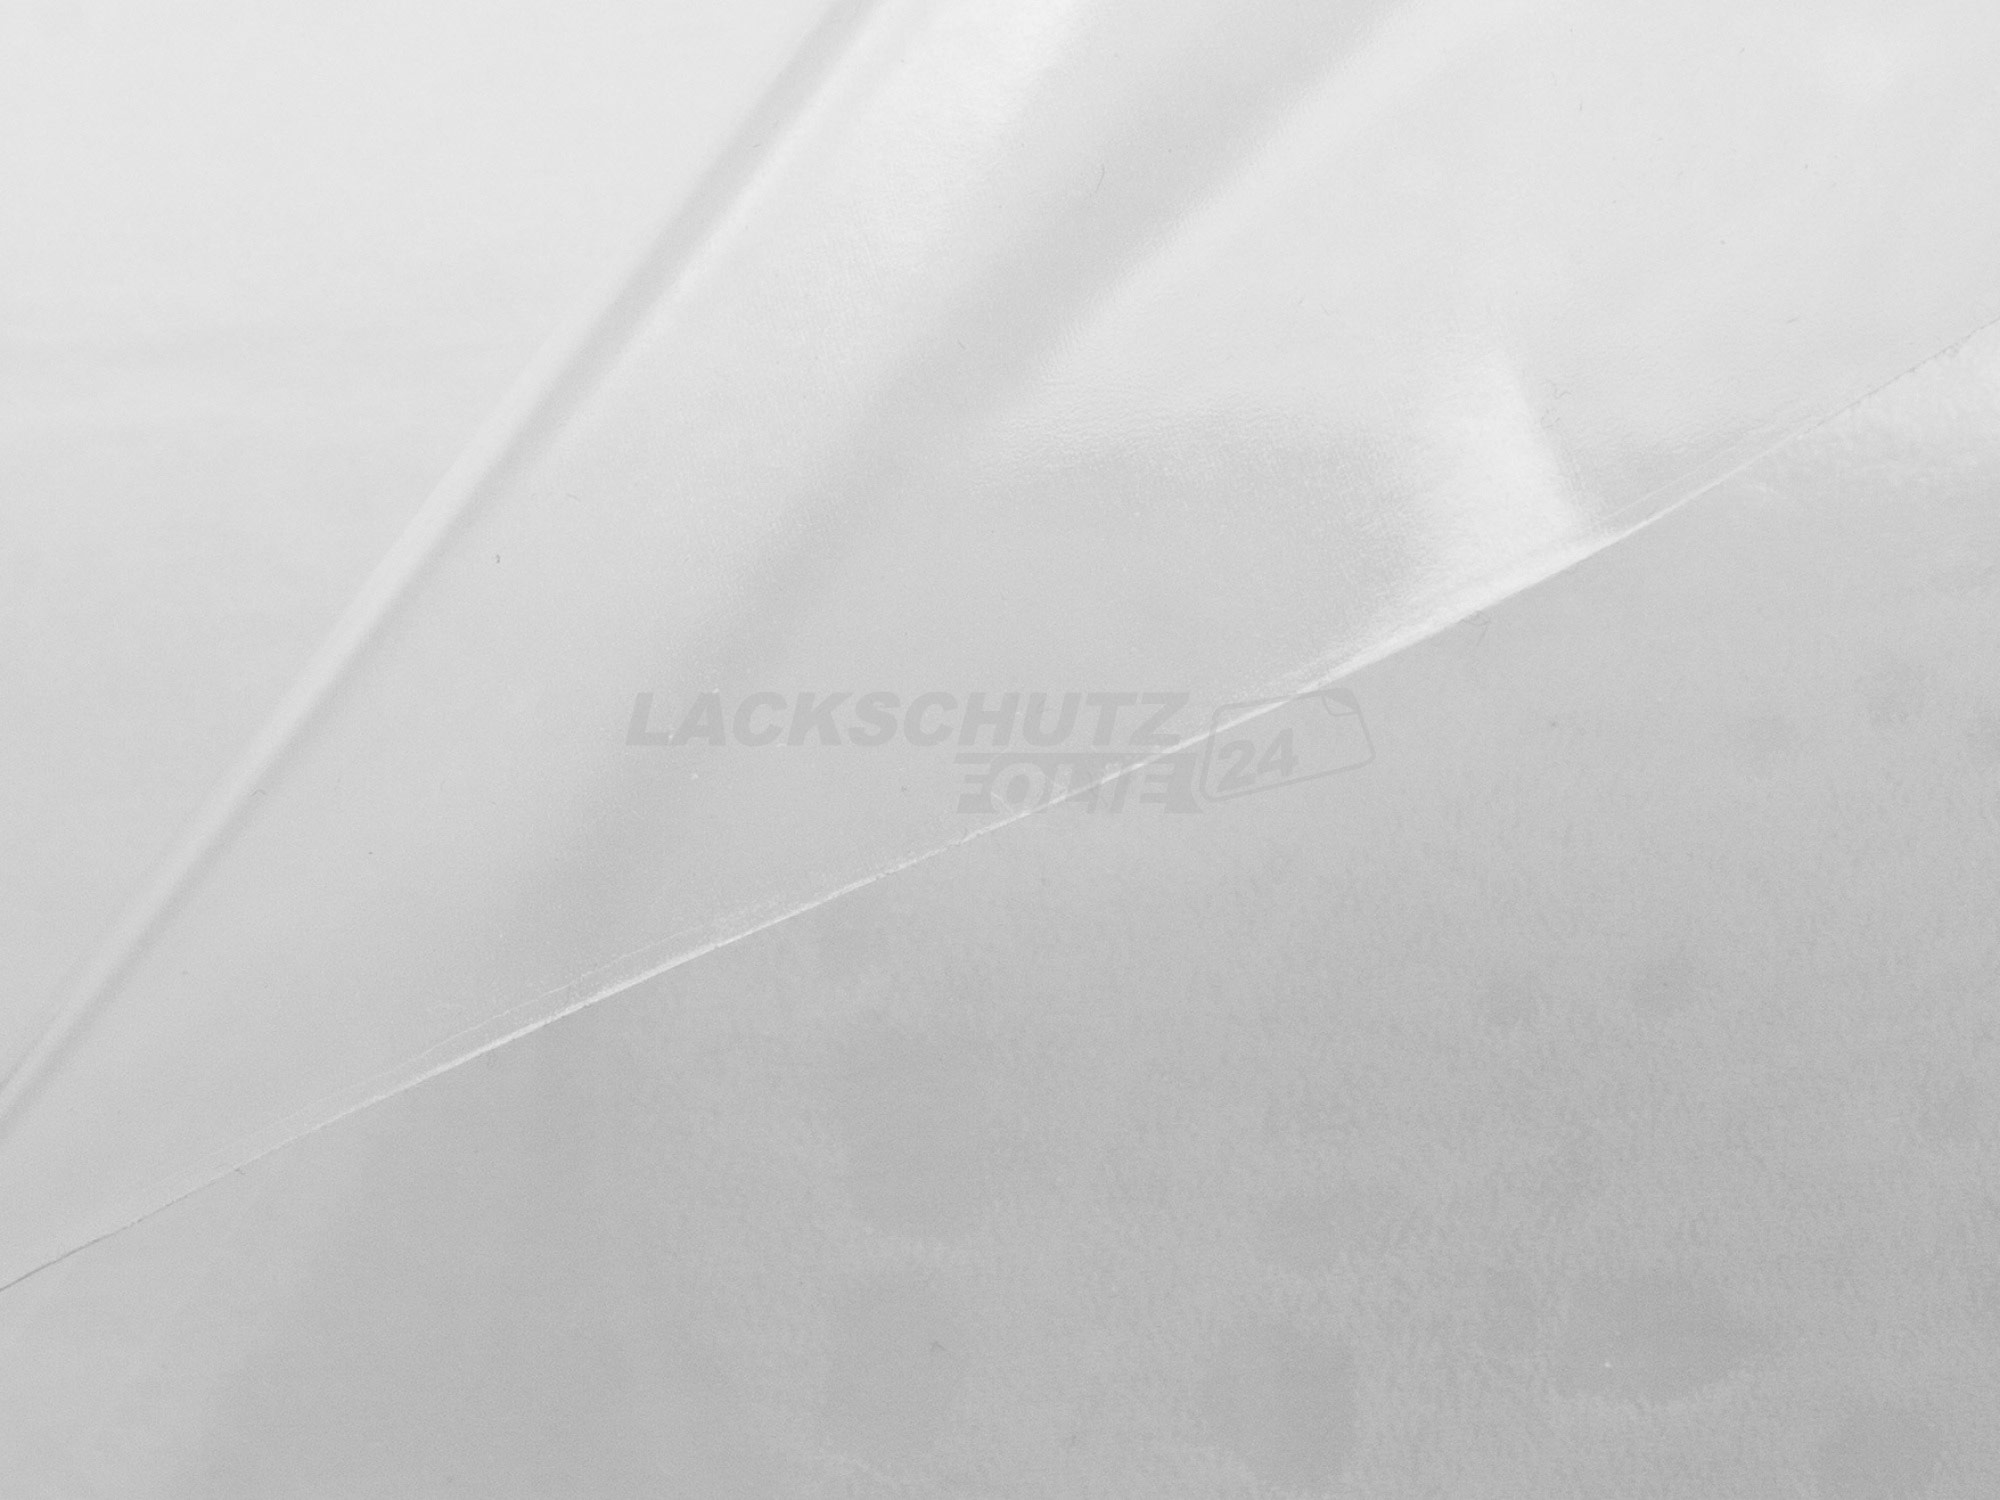 Lackschutzfolie Laufmeterware - Transparent Glatt Hochglänzend